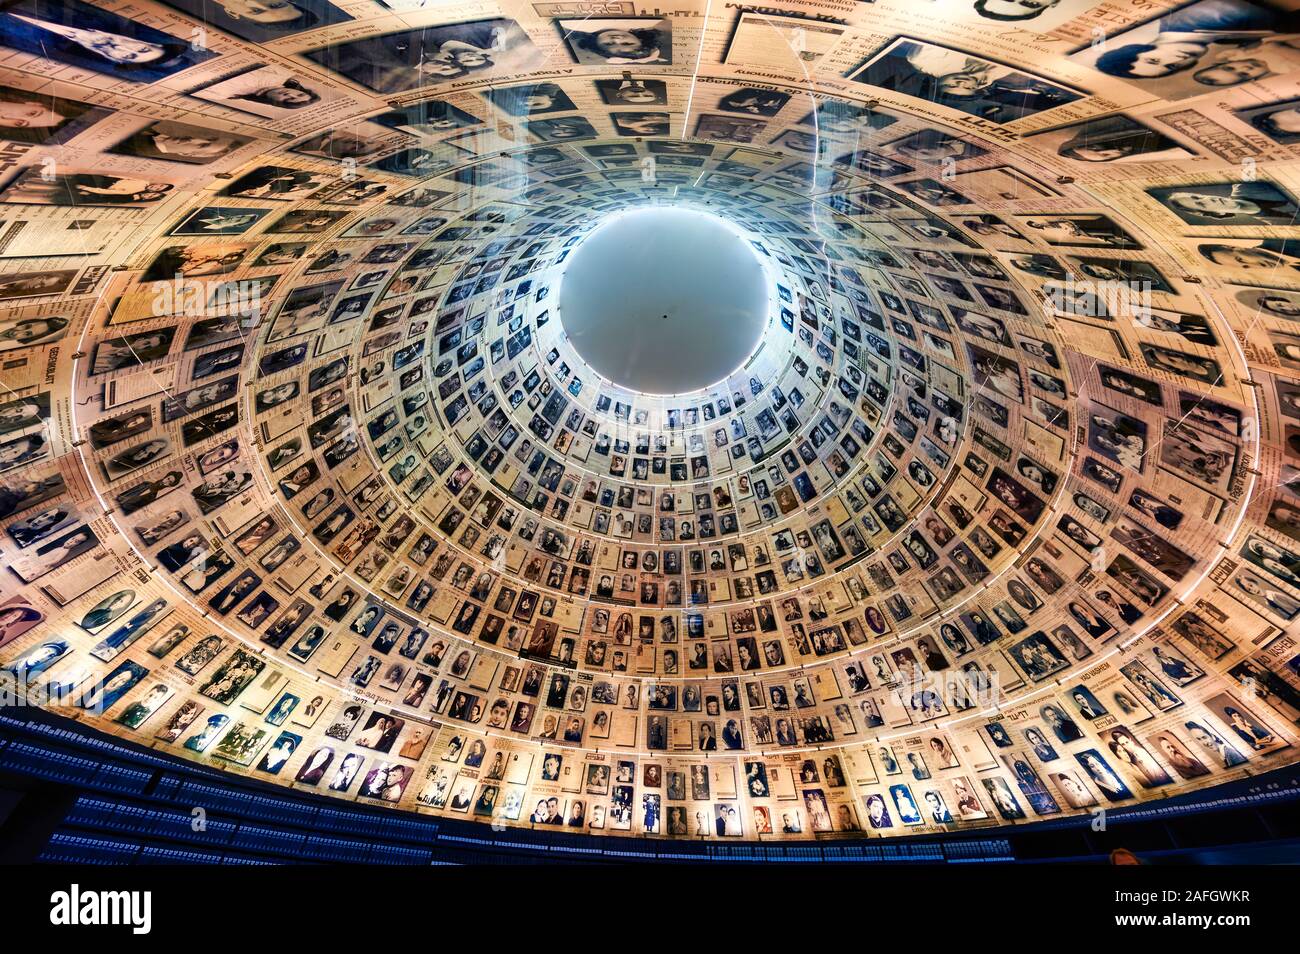 Gerusalemme in Israele. Yad Vashem. Memoriale per le vittime dell'olocausto. La Sala dei nomi Foto Stock